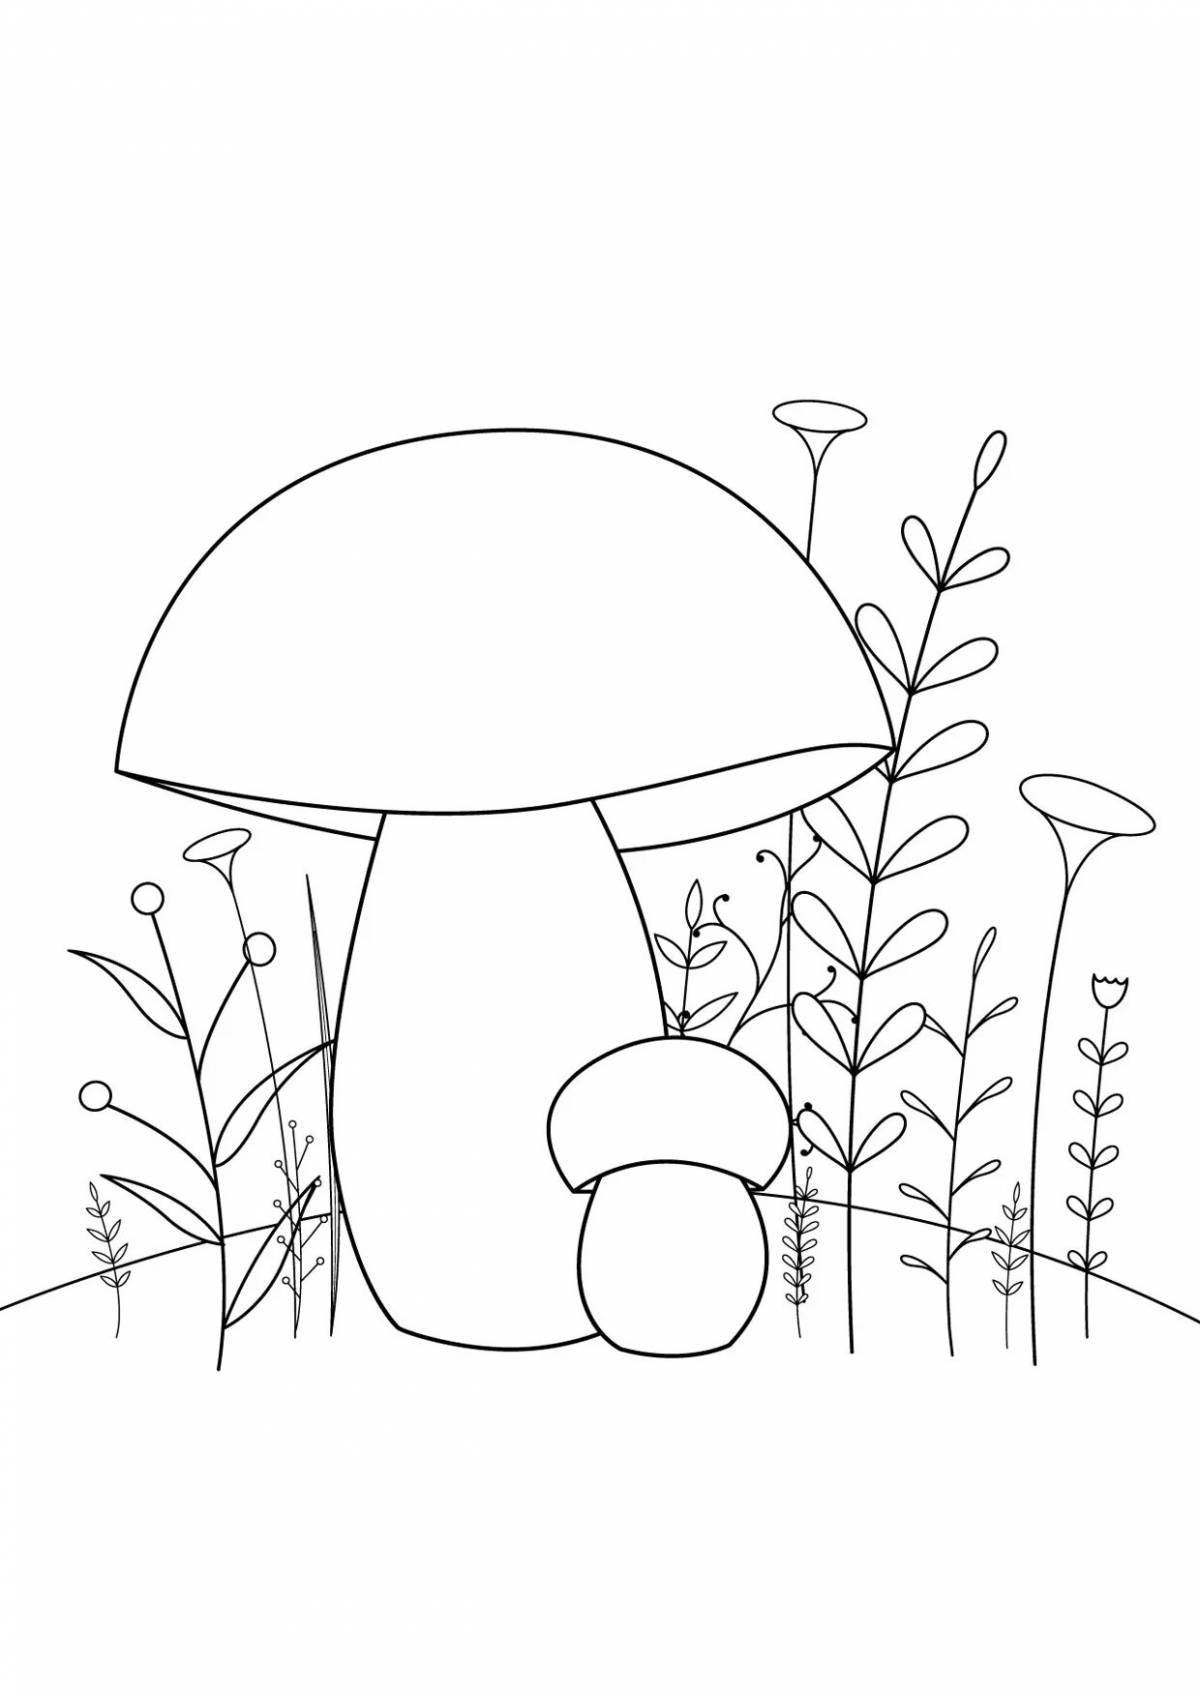 Colorful boletus mushroom coloring page